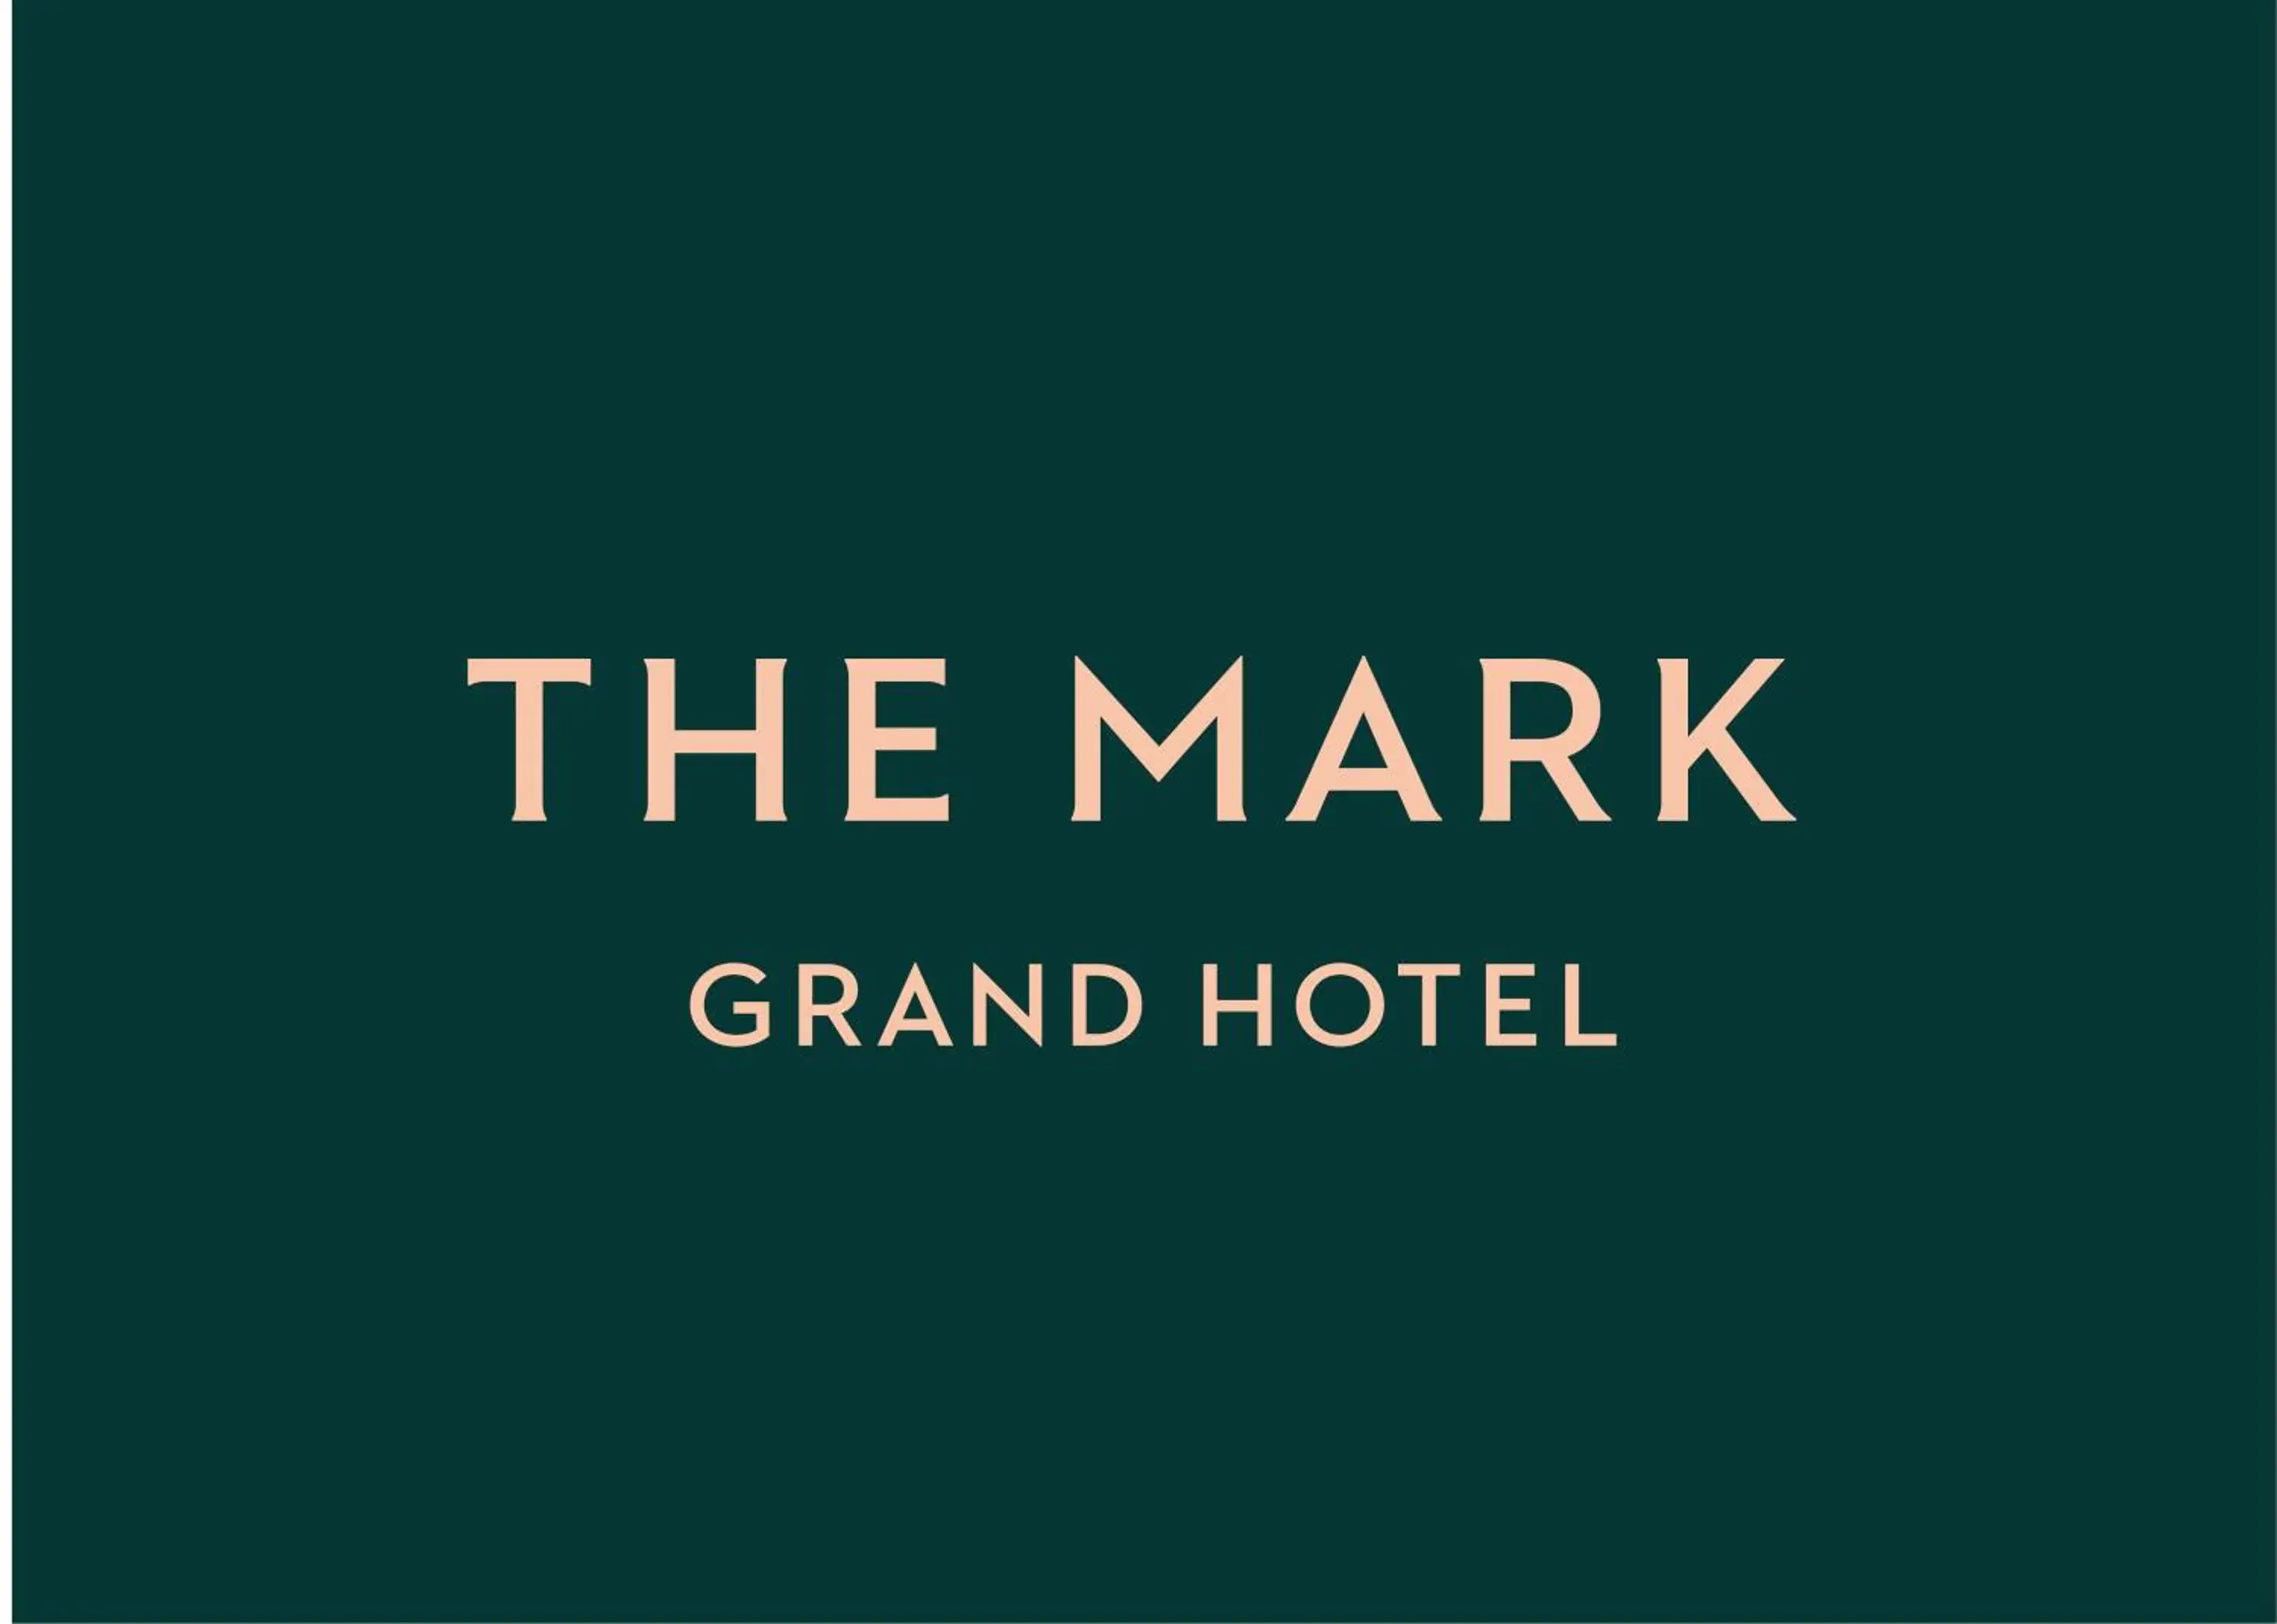 Logo/Certificate/Sign in The Mark Grand Hotel